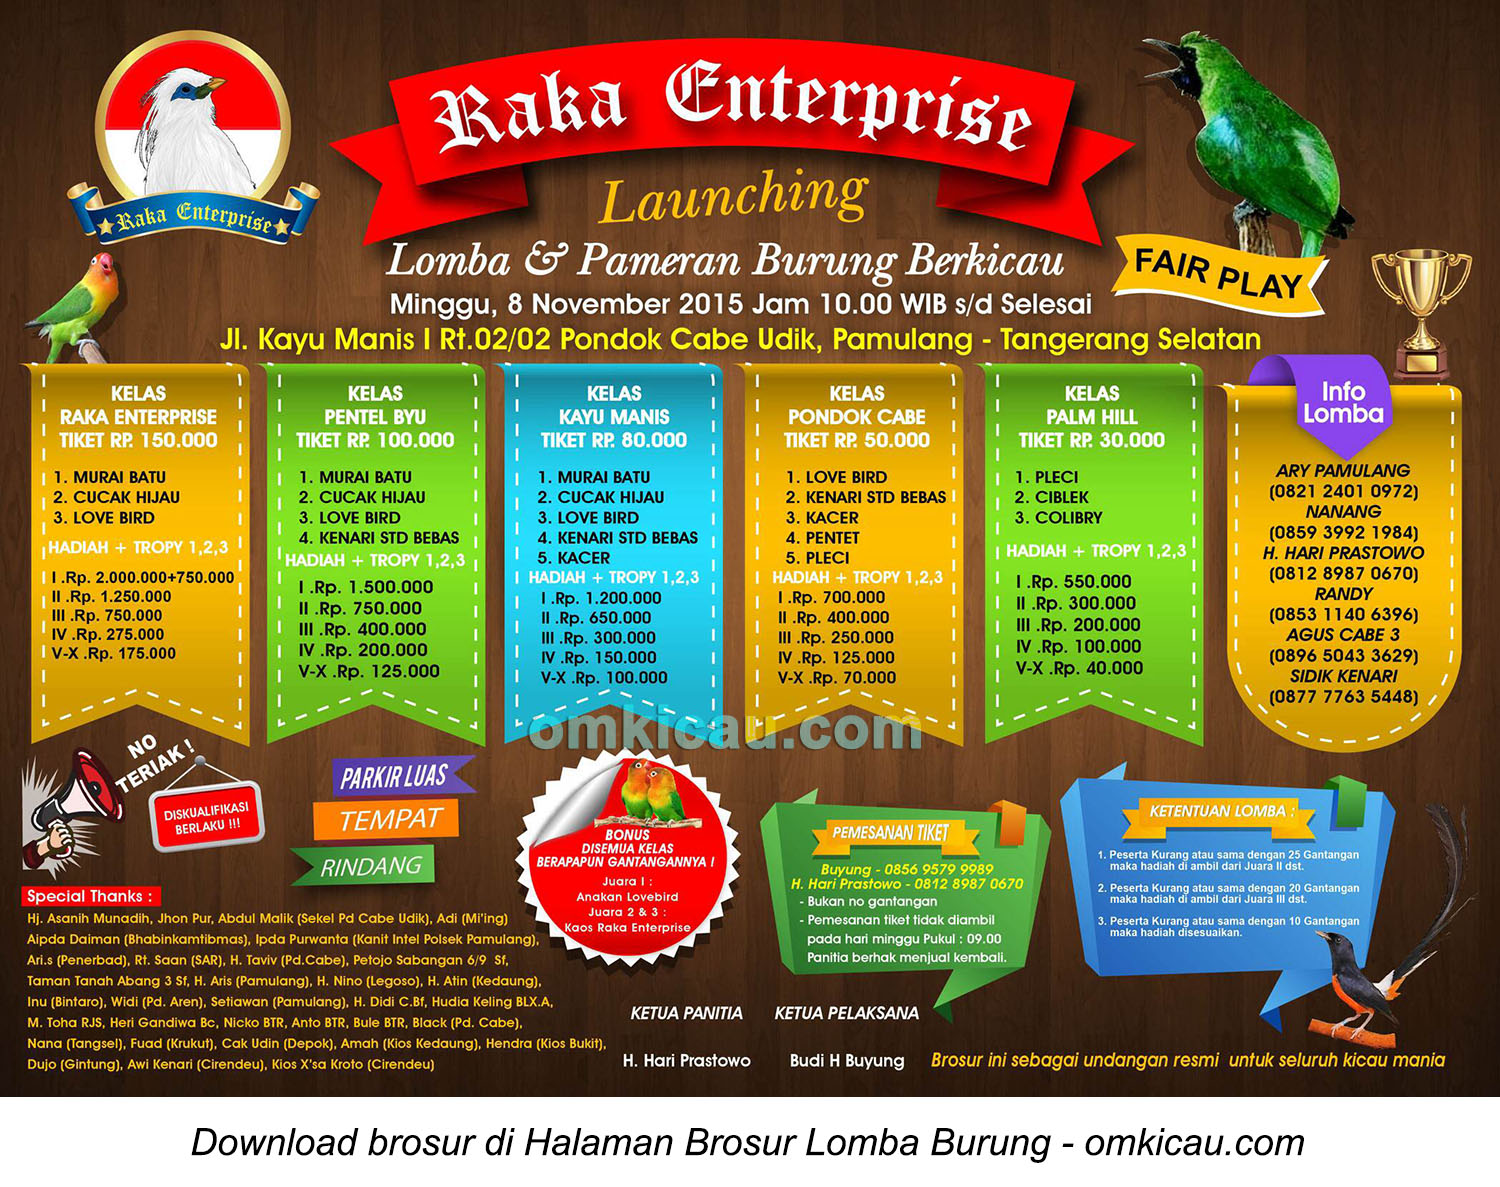 Brosur Lomba Burung Berkicau Launching Raka Enterprise, Tangerang Selatan, 8 November 2015